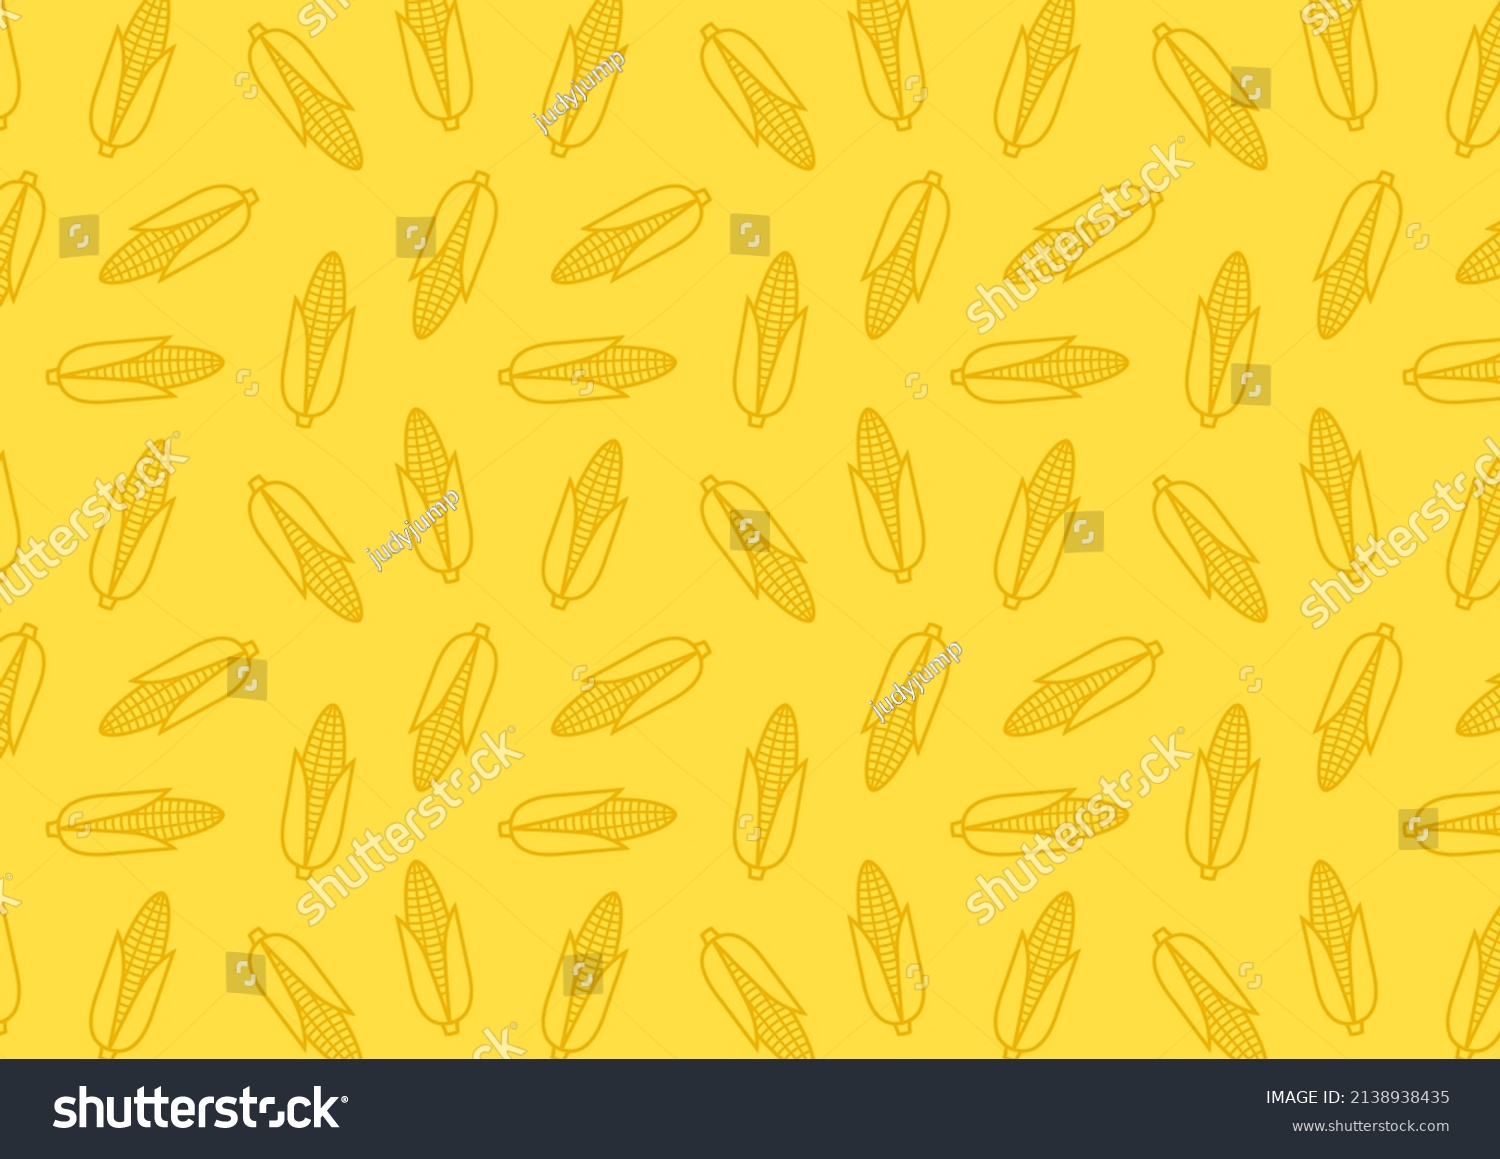 Corn icon. Corn doodle pattern wallpaper. Corn on yellow background. #2138938435